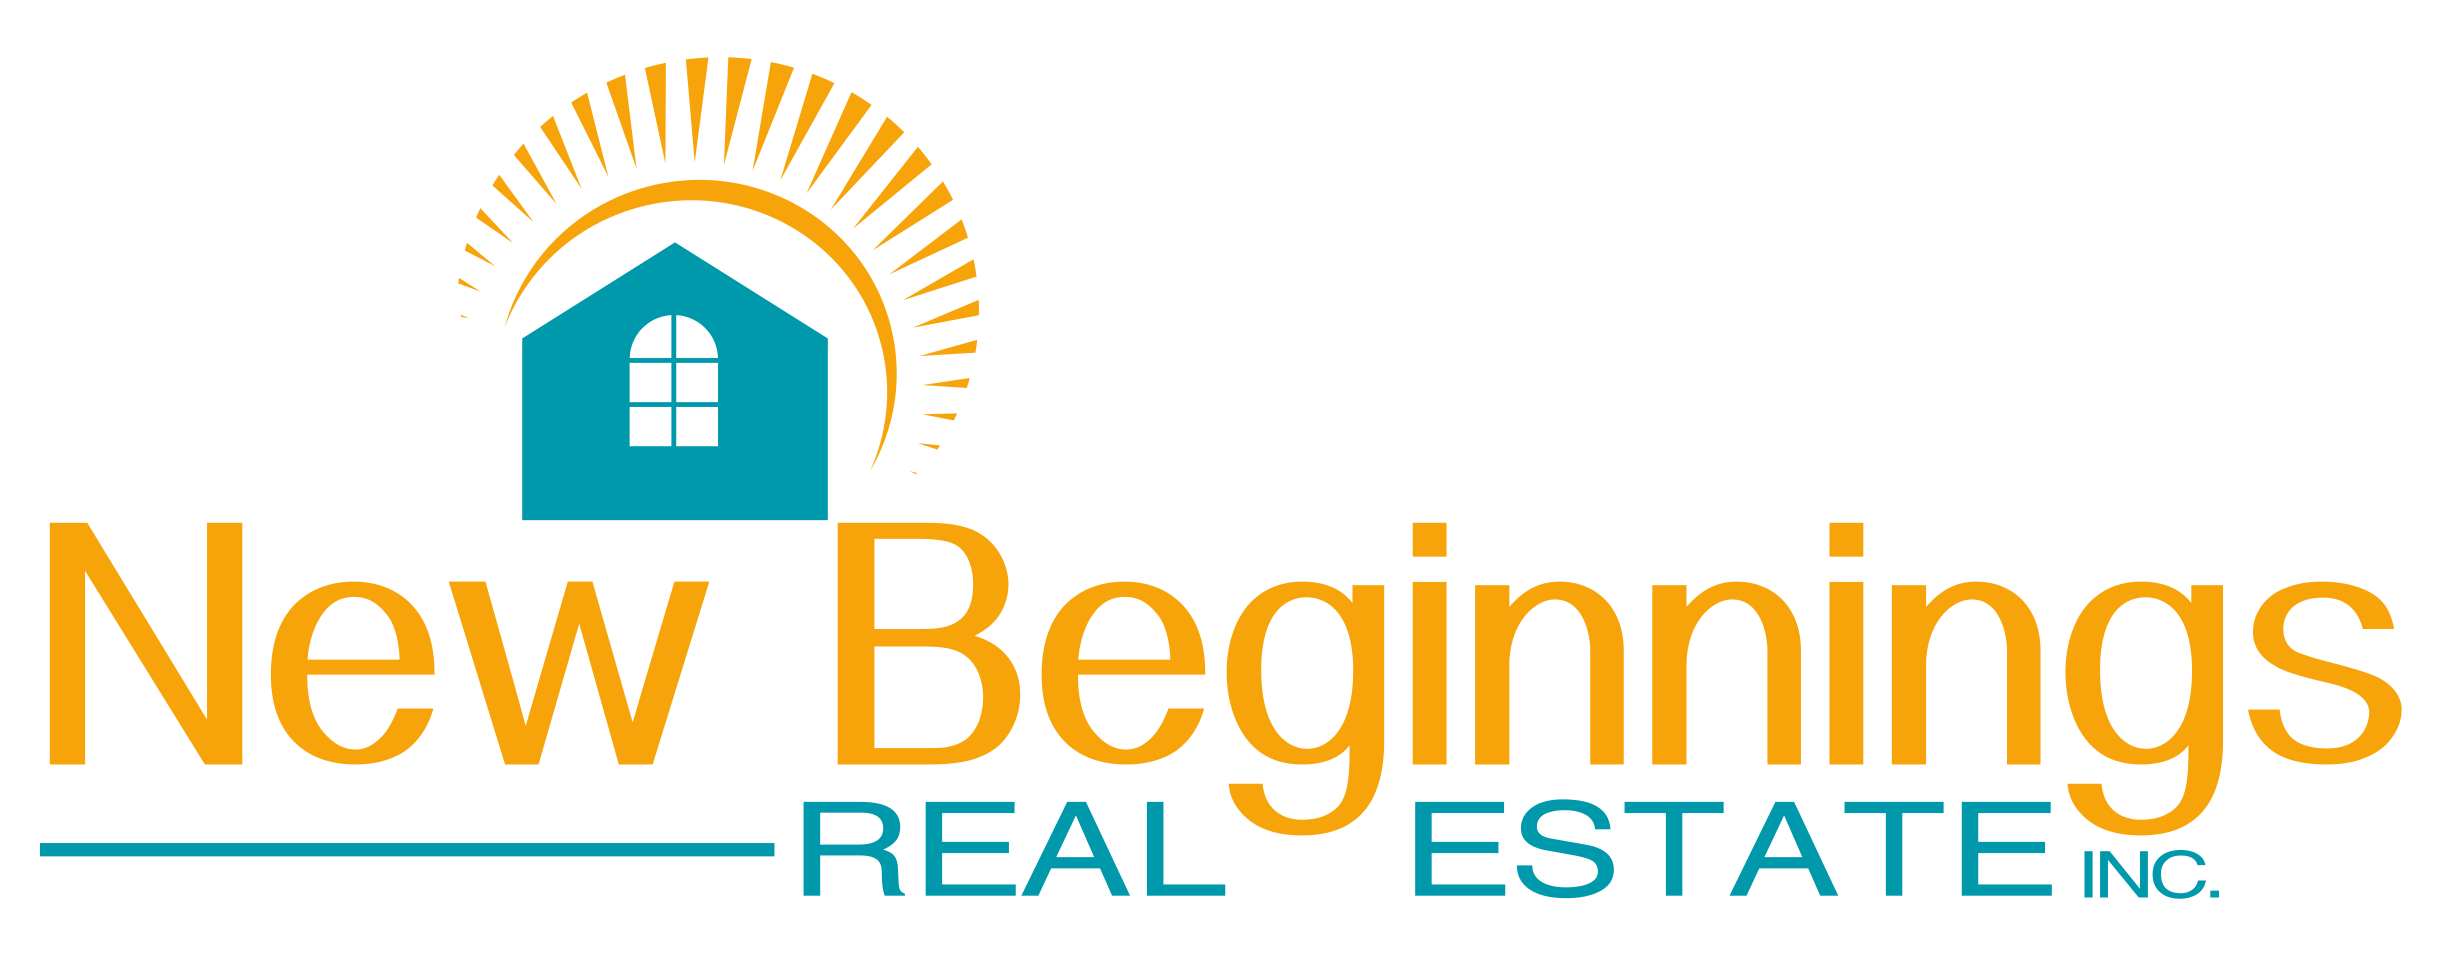 New Beginning Real Estate